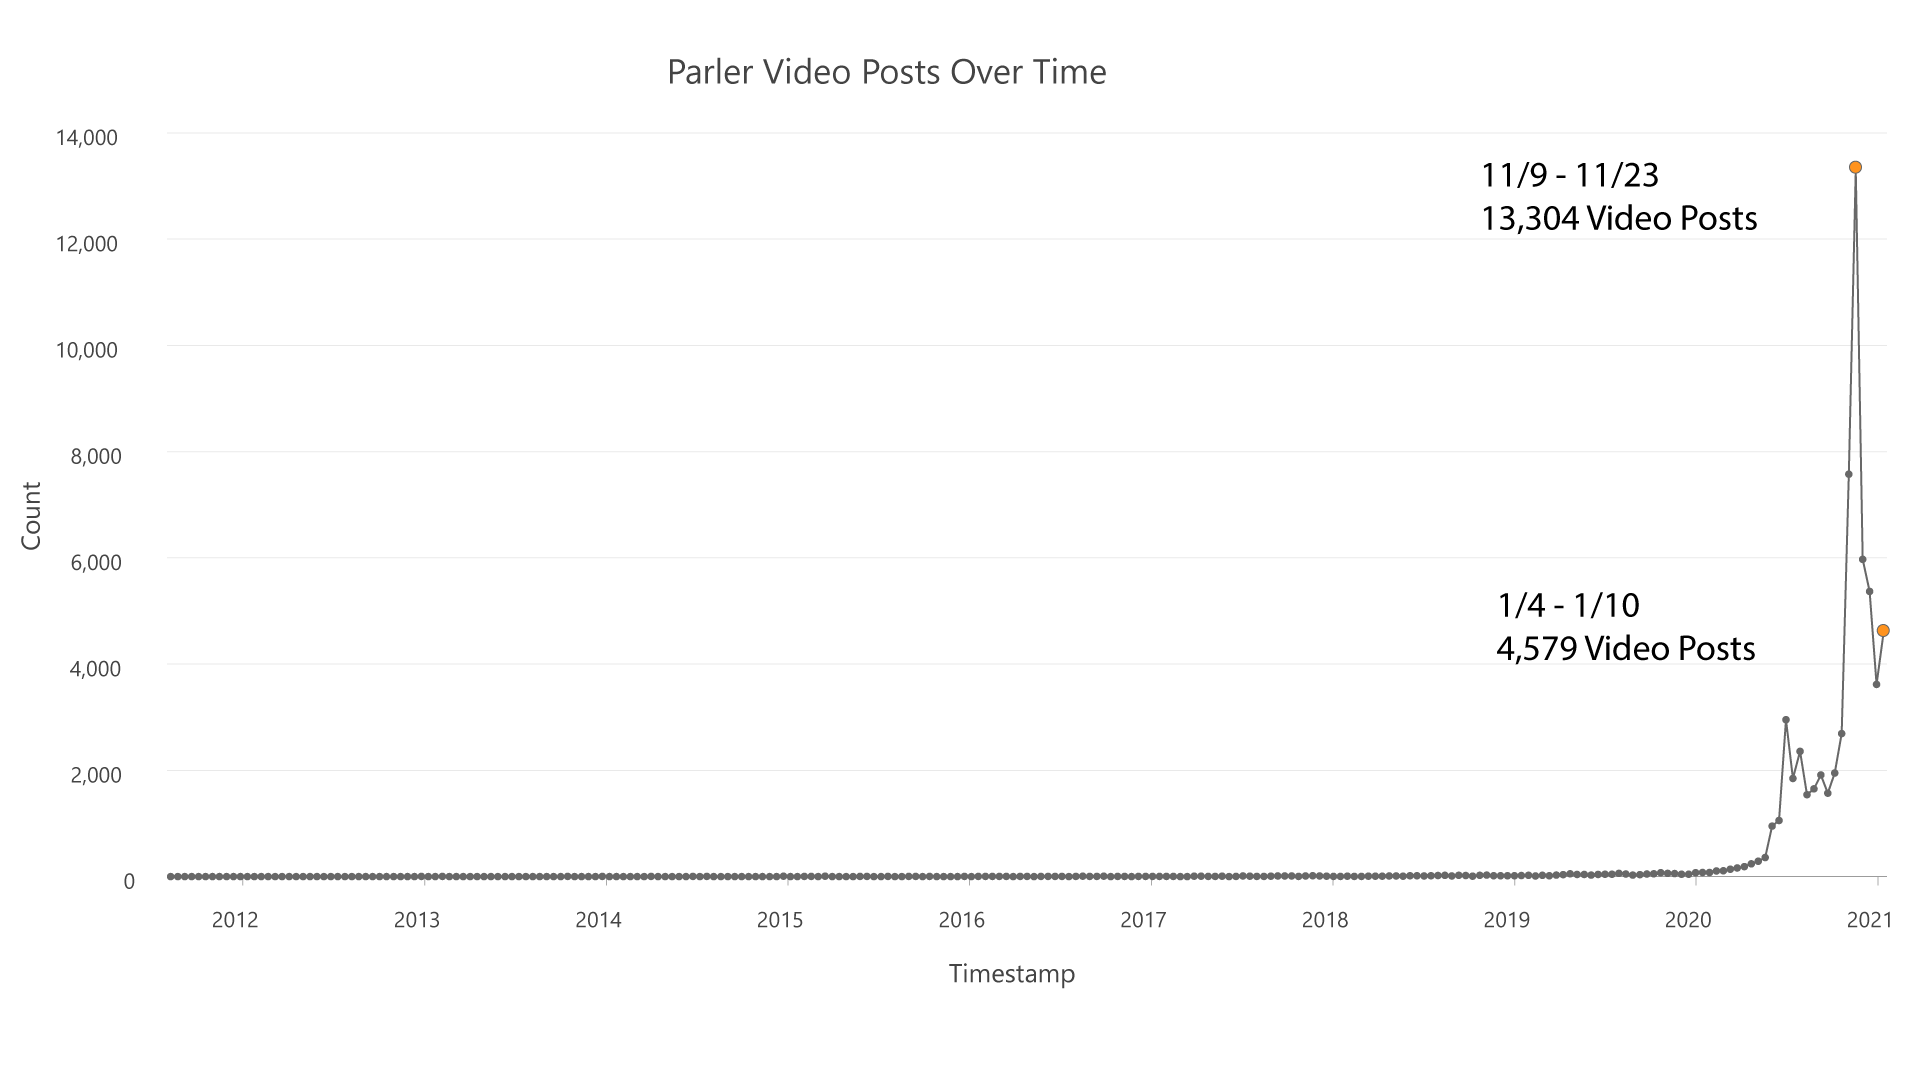 Parler video posts over time